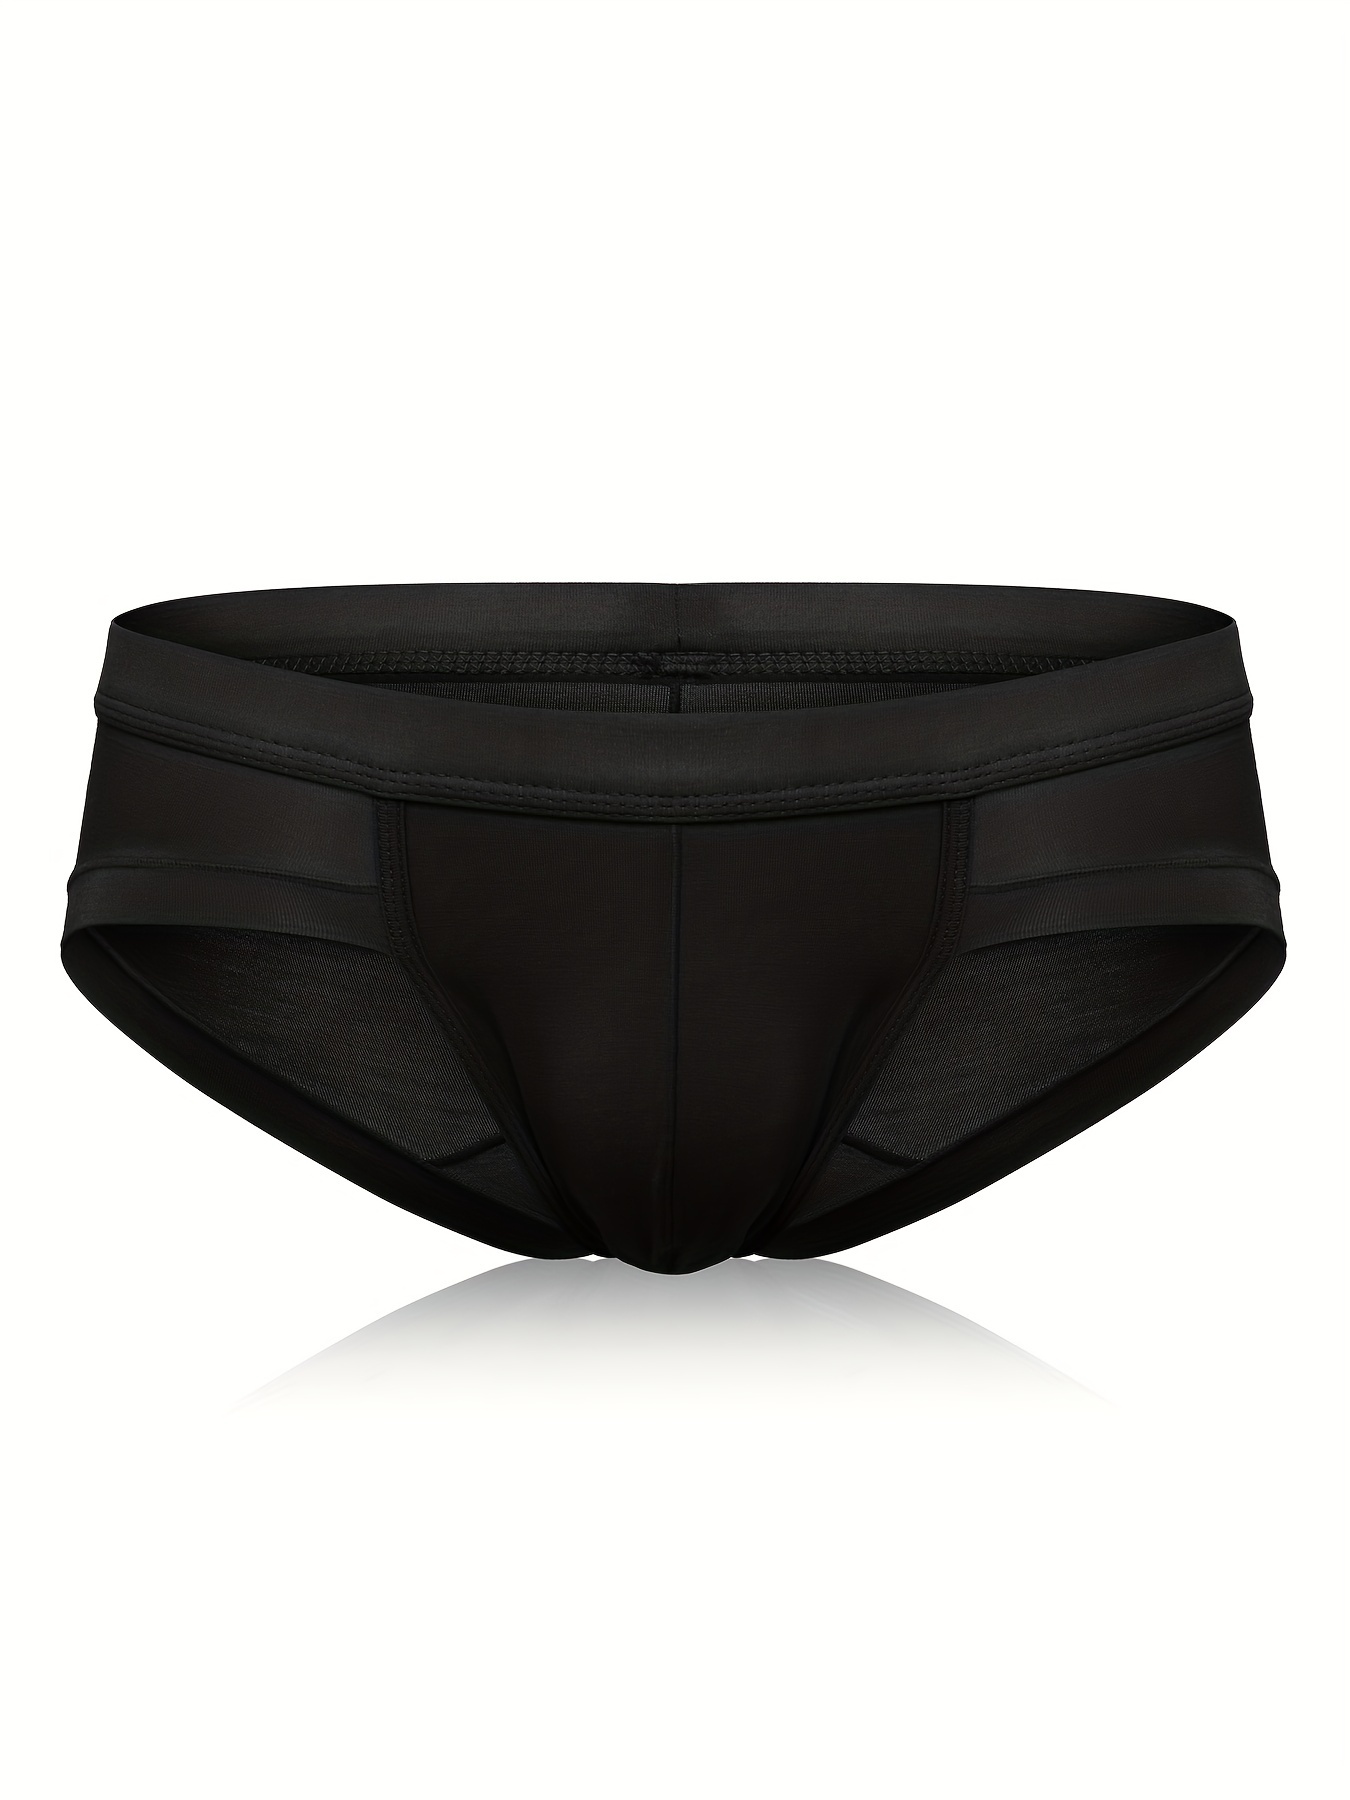 Buy Boys Sexy Underwear Low Waist Briefs Stretchable Underpants